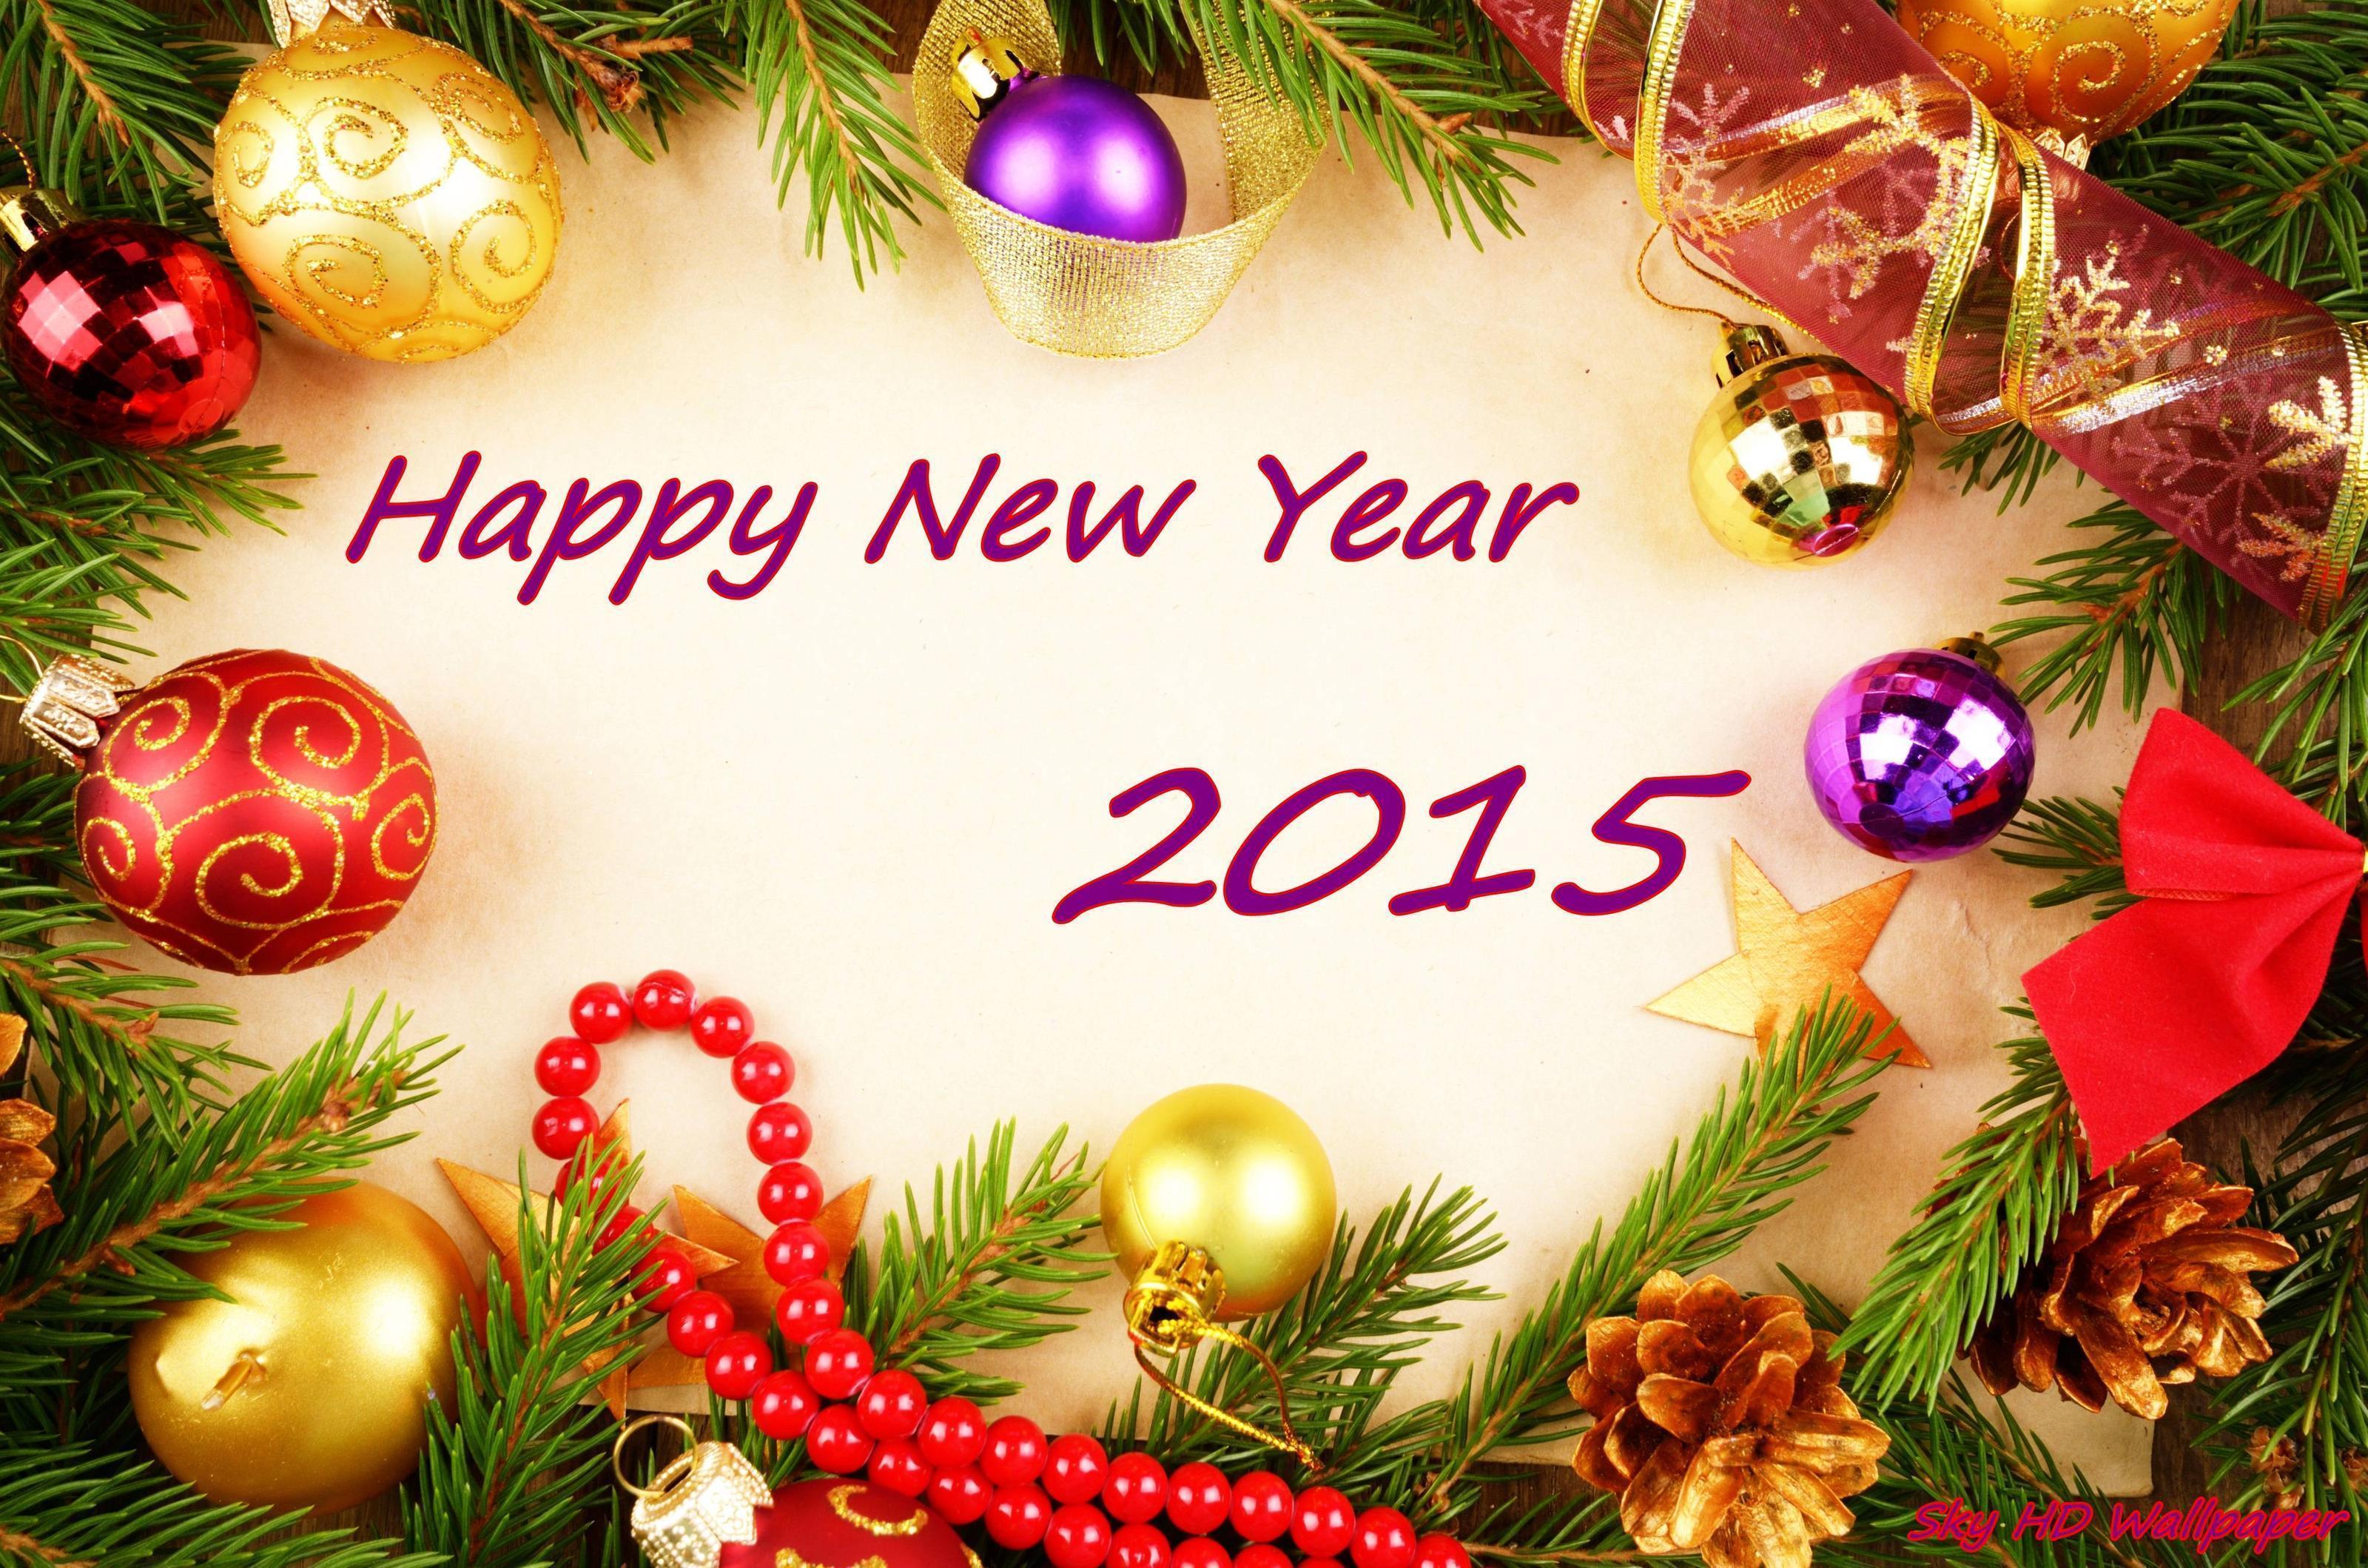 HD Wallpaper Happy New Year Wallpaper 2015 Pc Free Download 2015